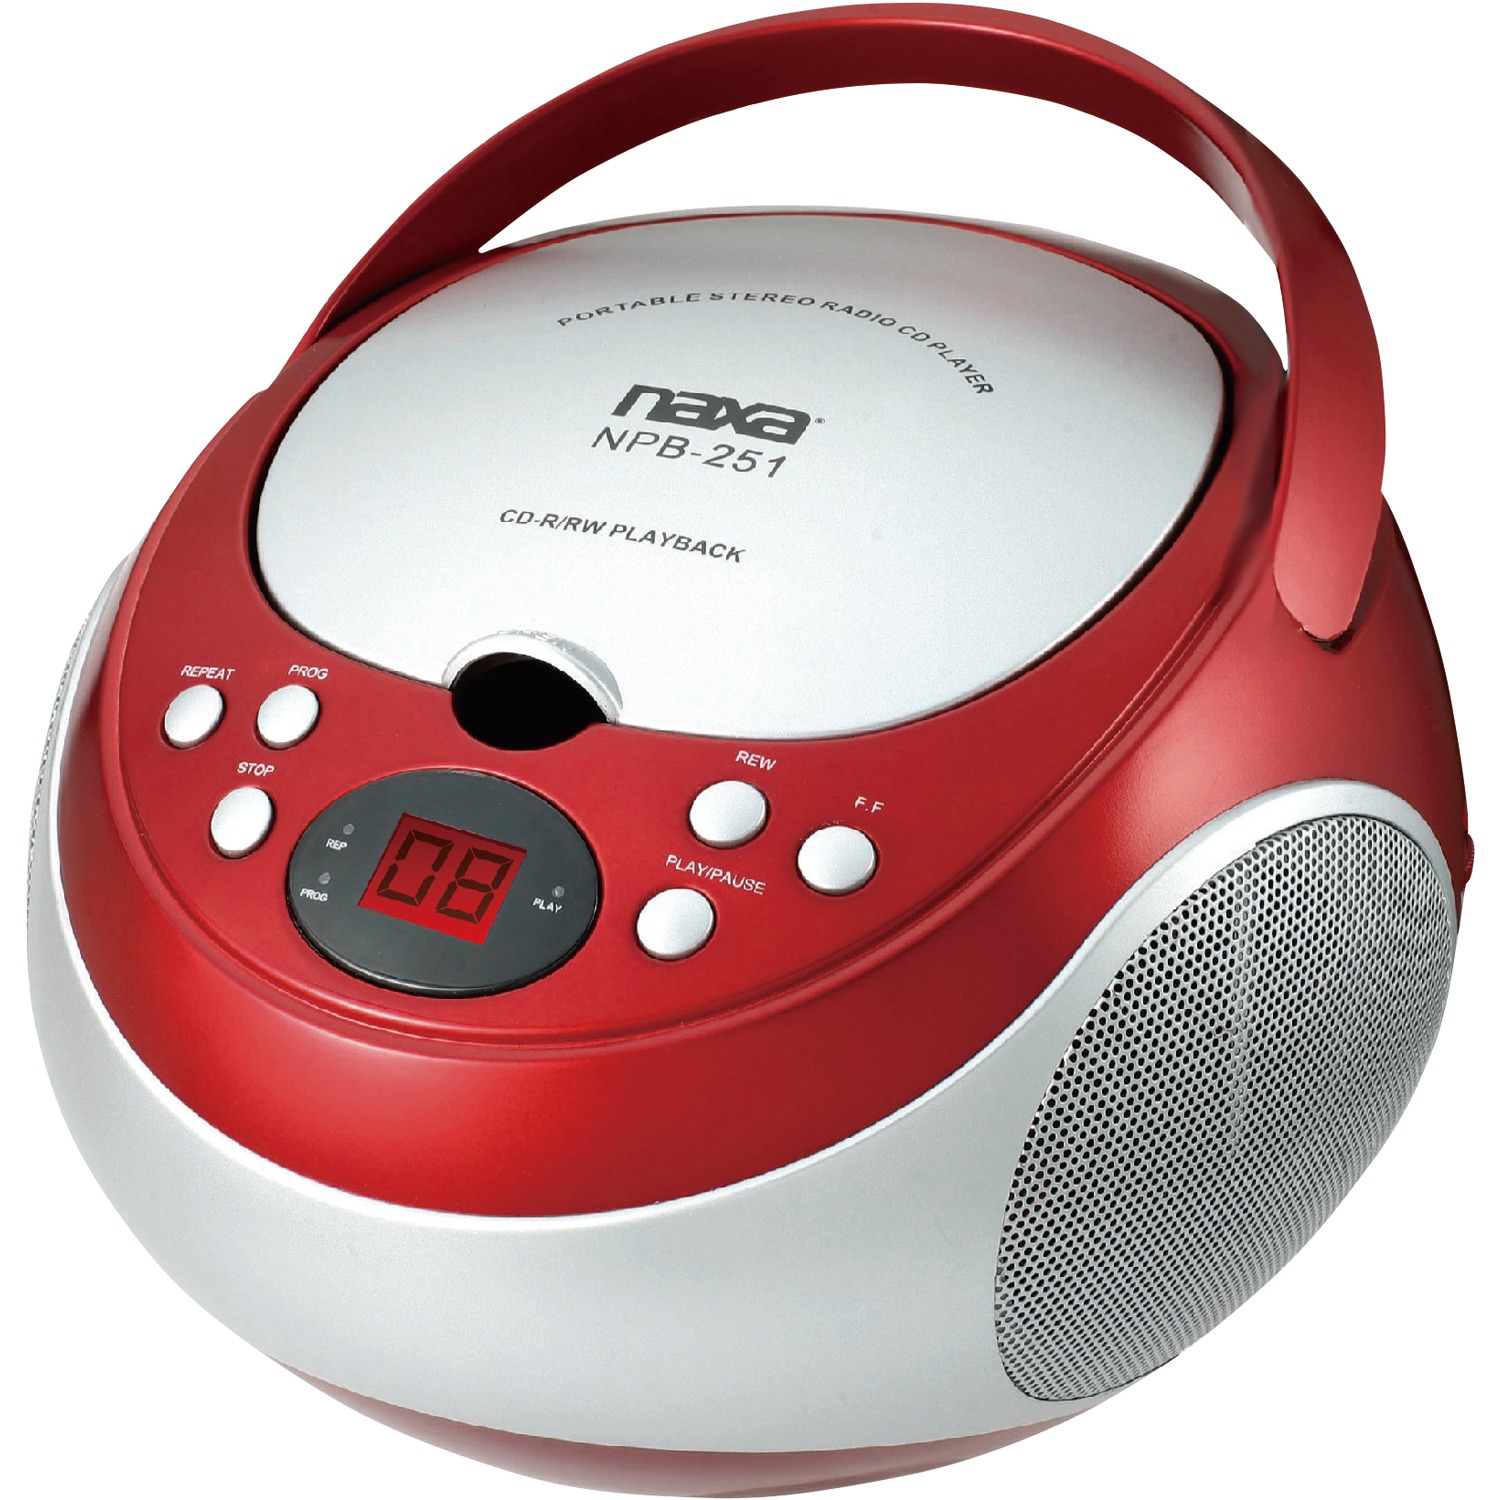 Naxa Portable CD Players With AM/FM Radio (Red)